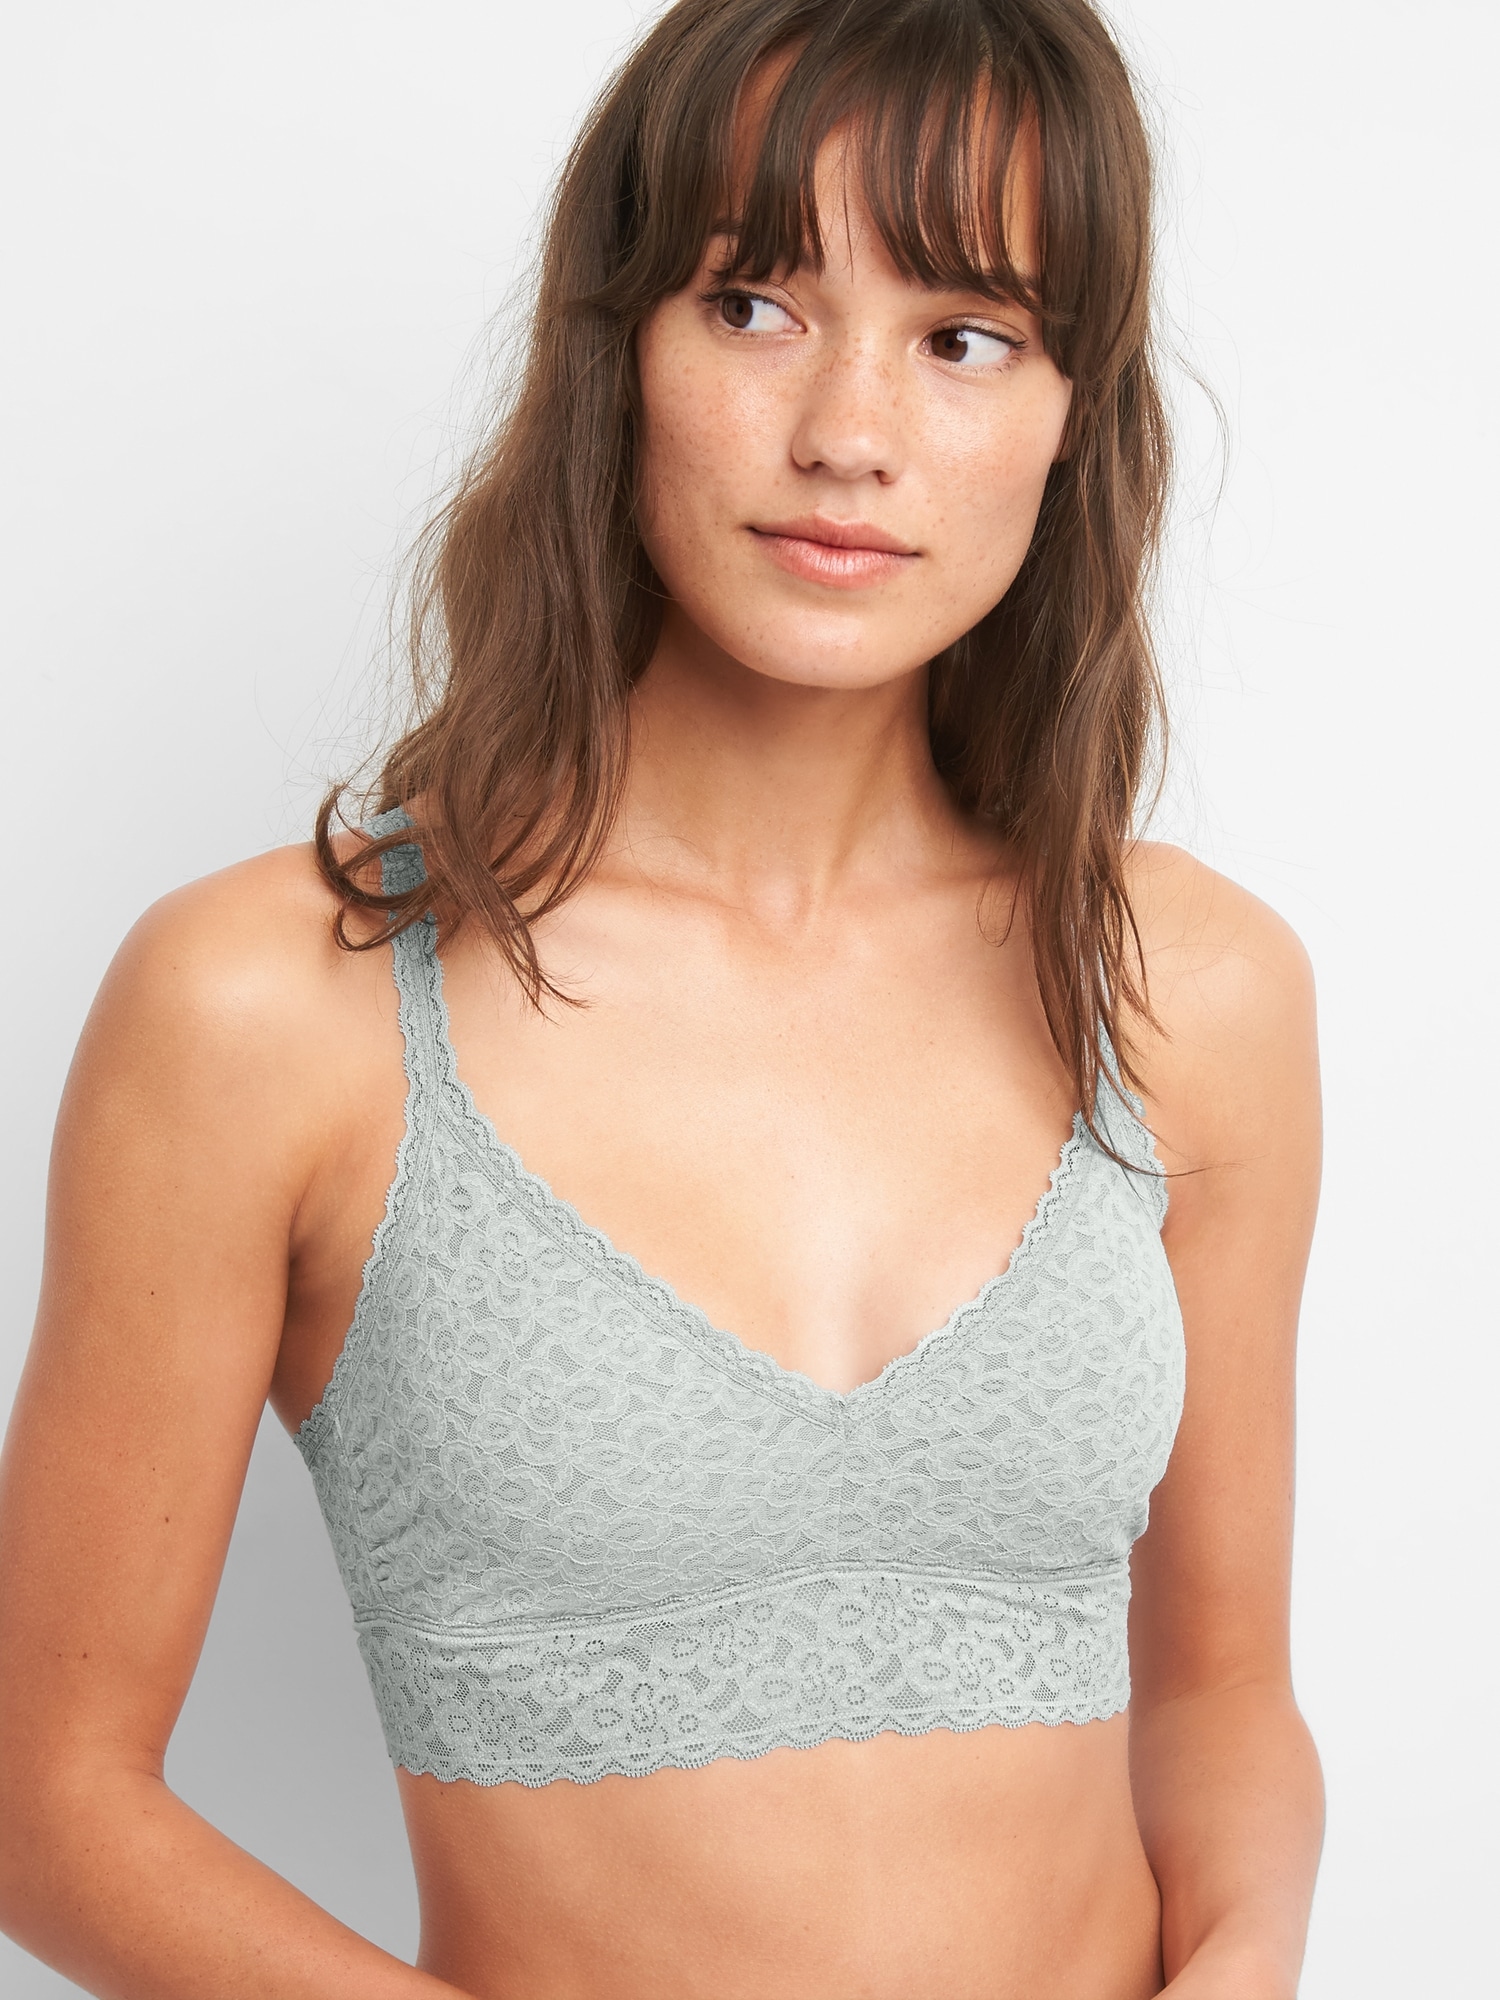 gvdentm Lace Bralettes For Women Women's Seamless Pullover Bra